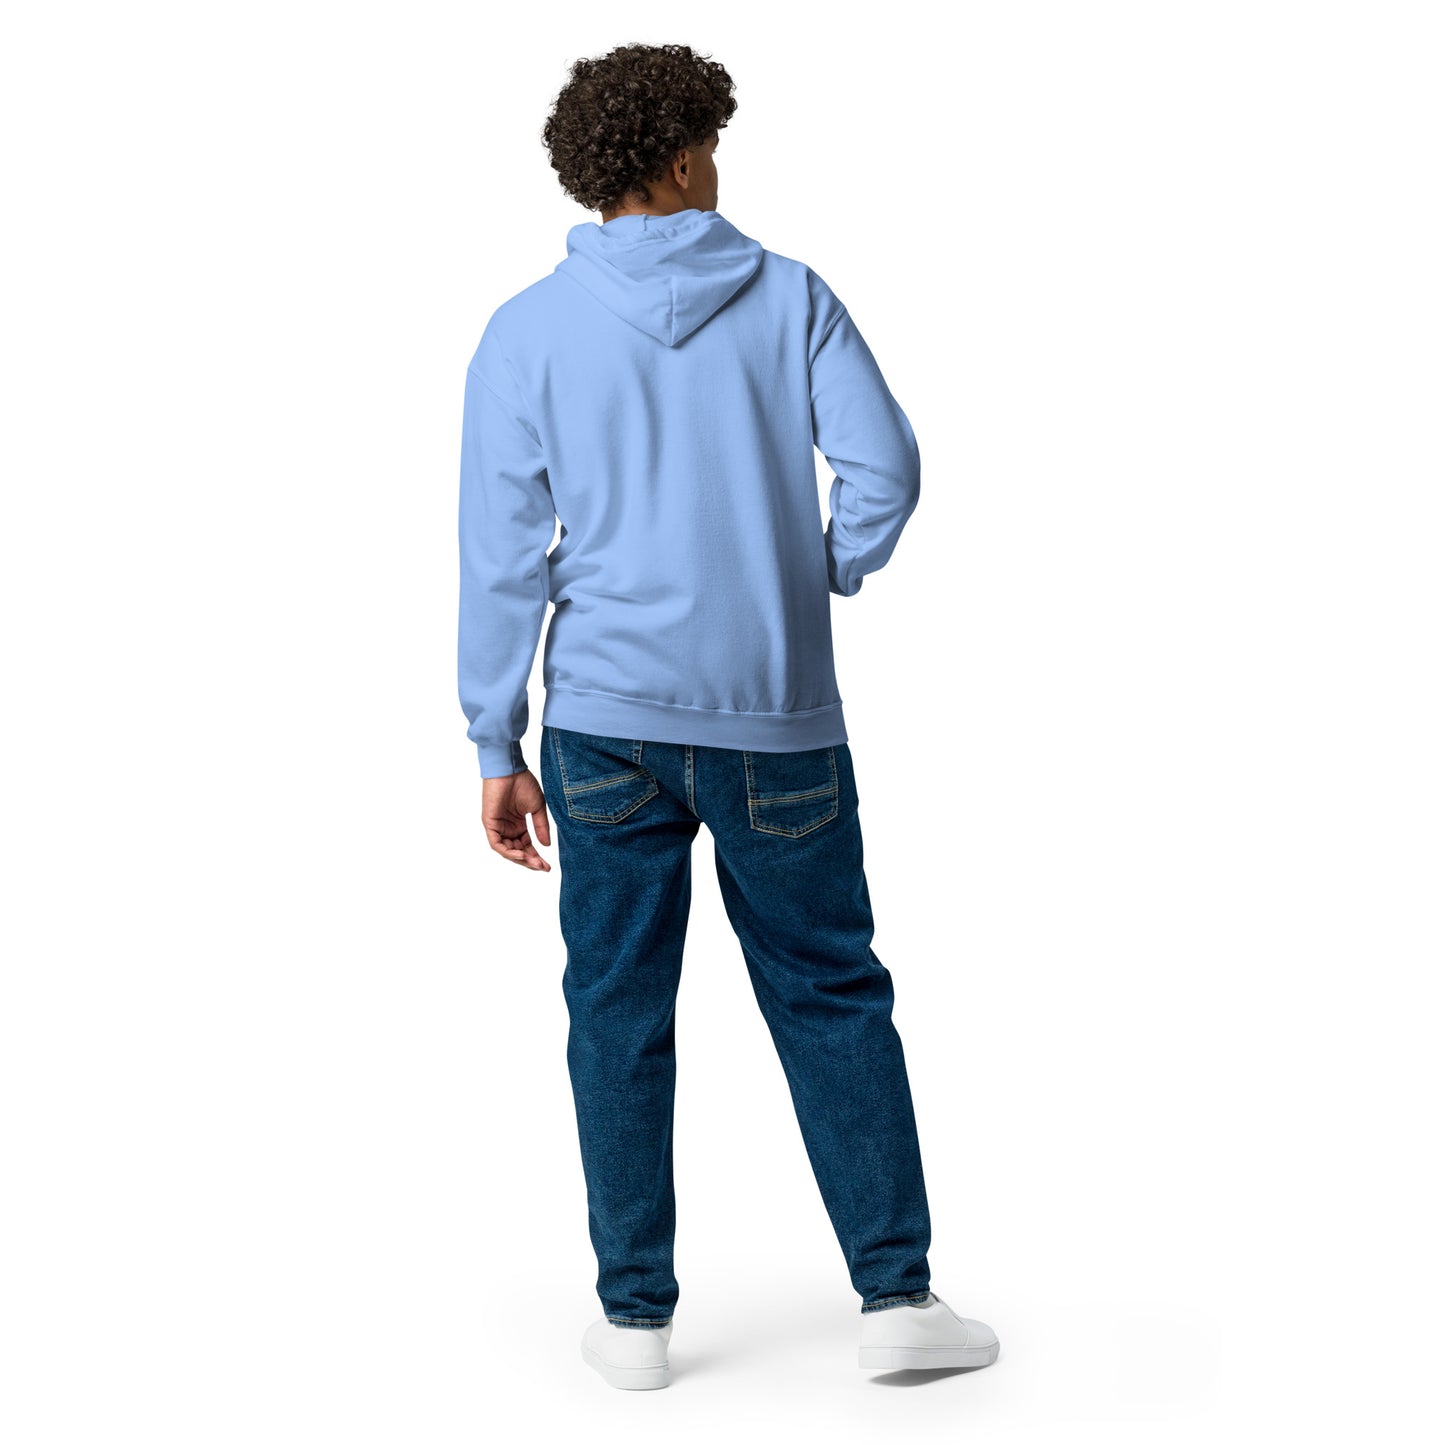 Unisex LionHeart heavy blend zip hoodie